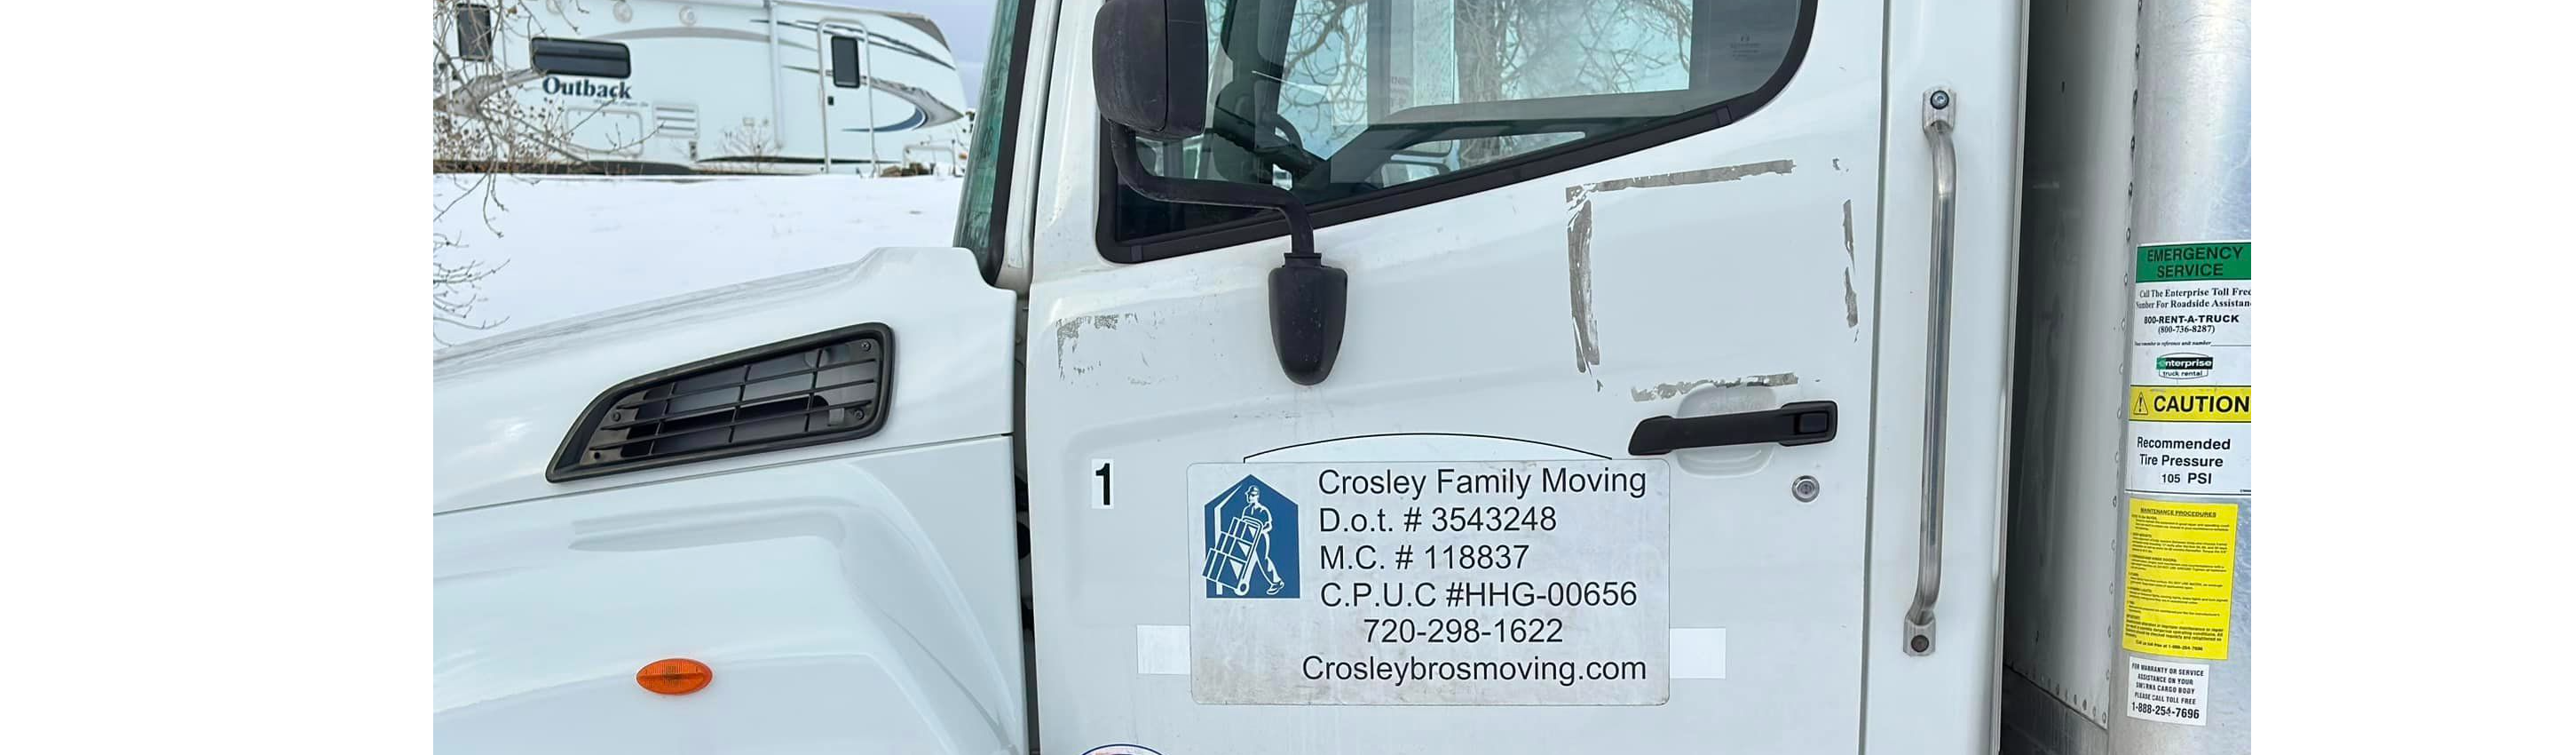 Crosley Family Moving